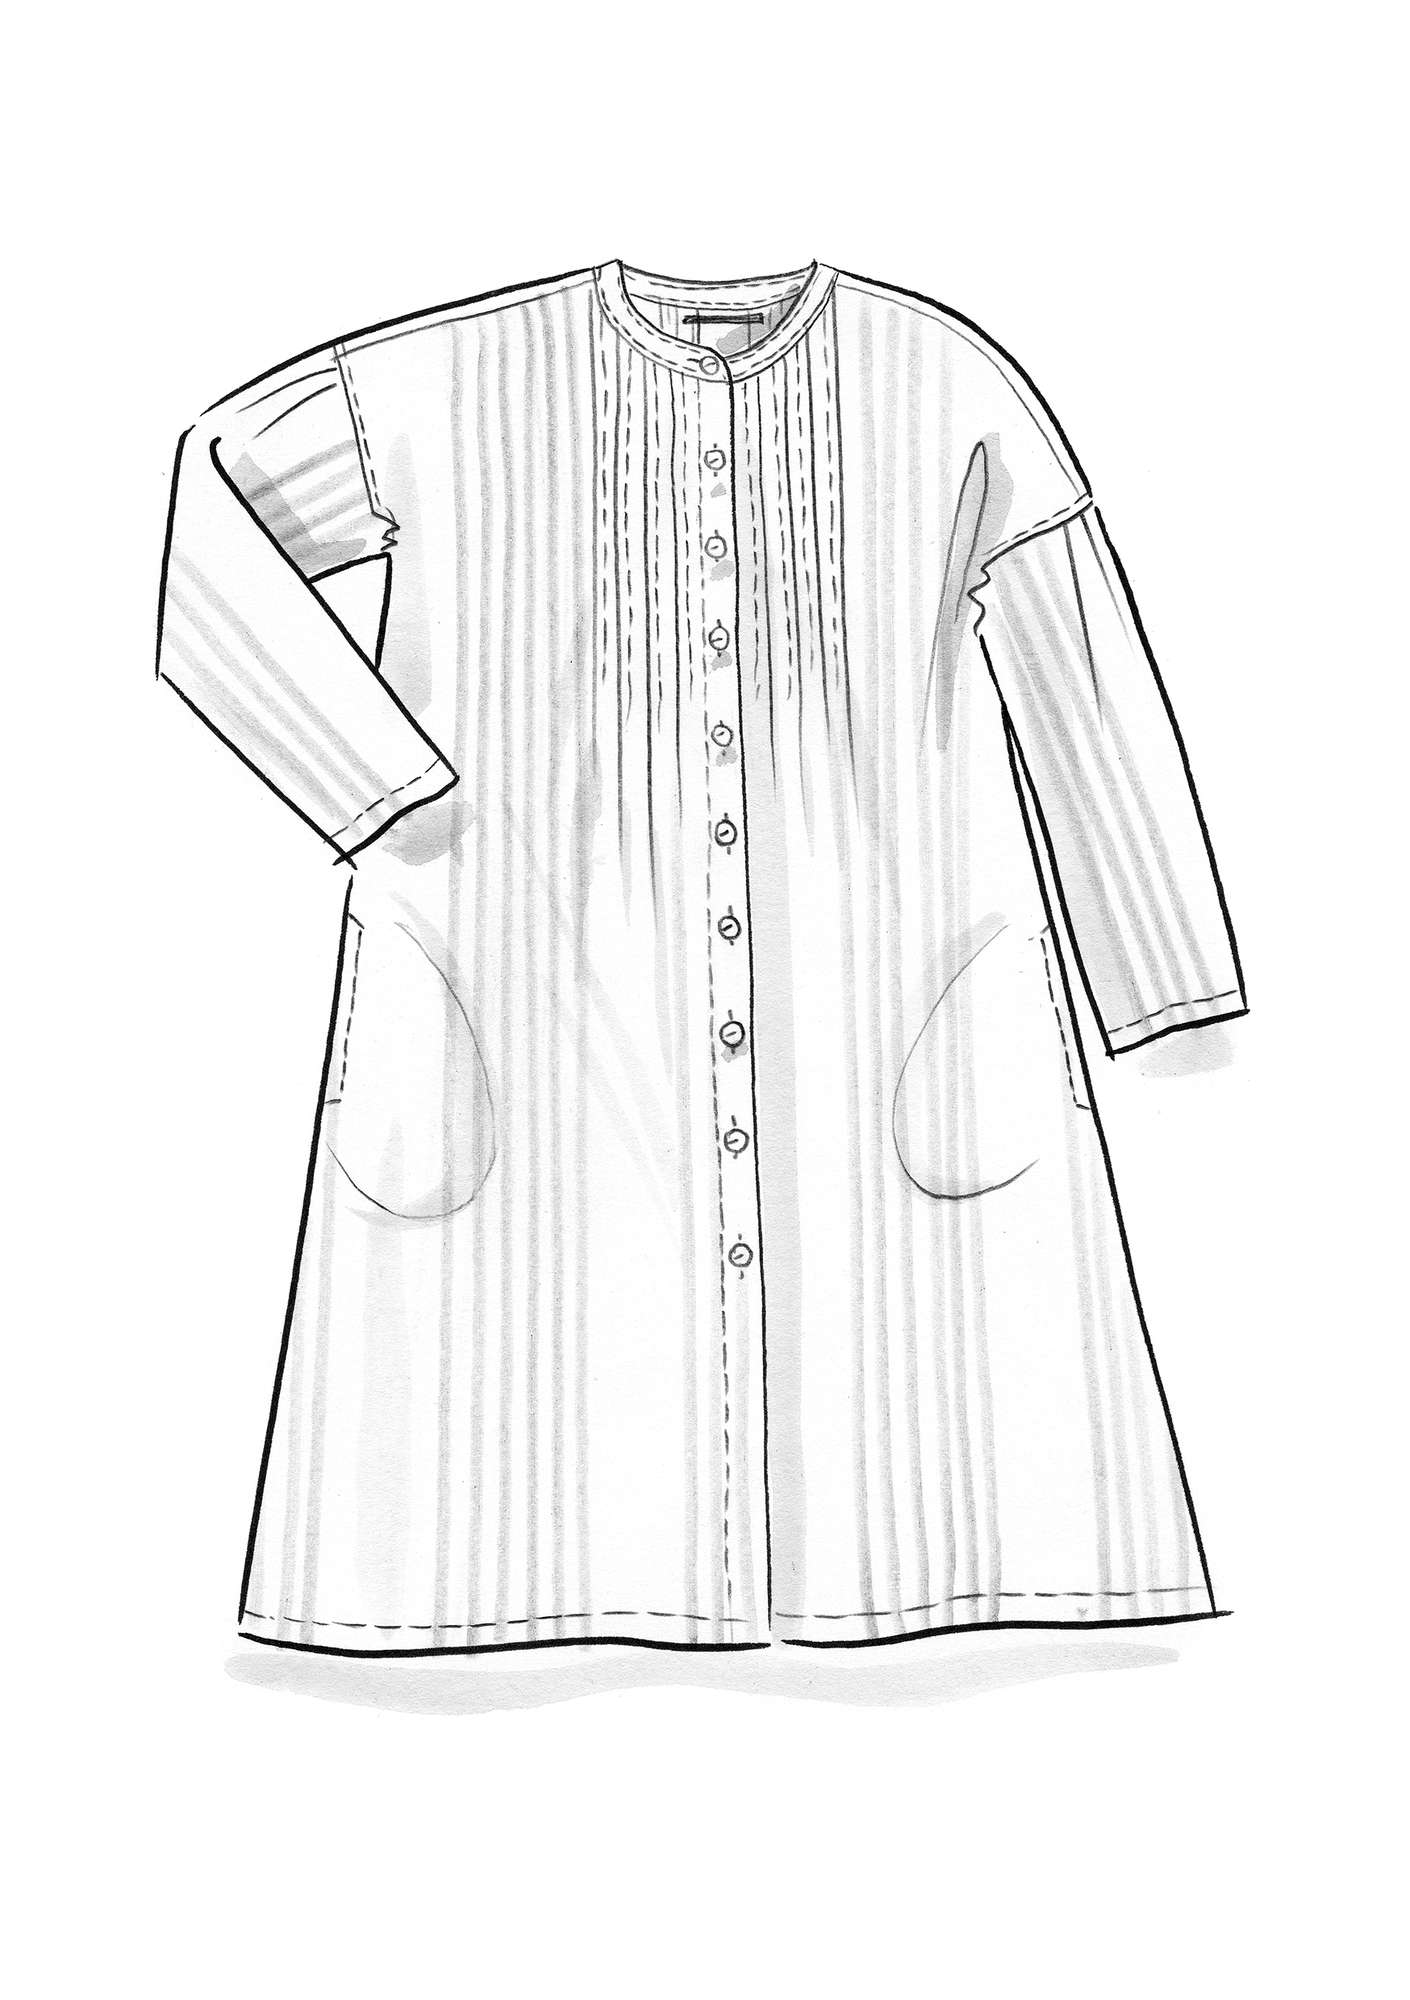 “Serafina” woven organic cotton dress elephant grey/patterned